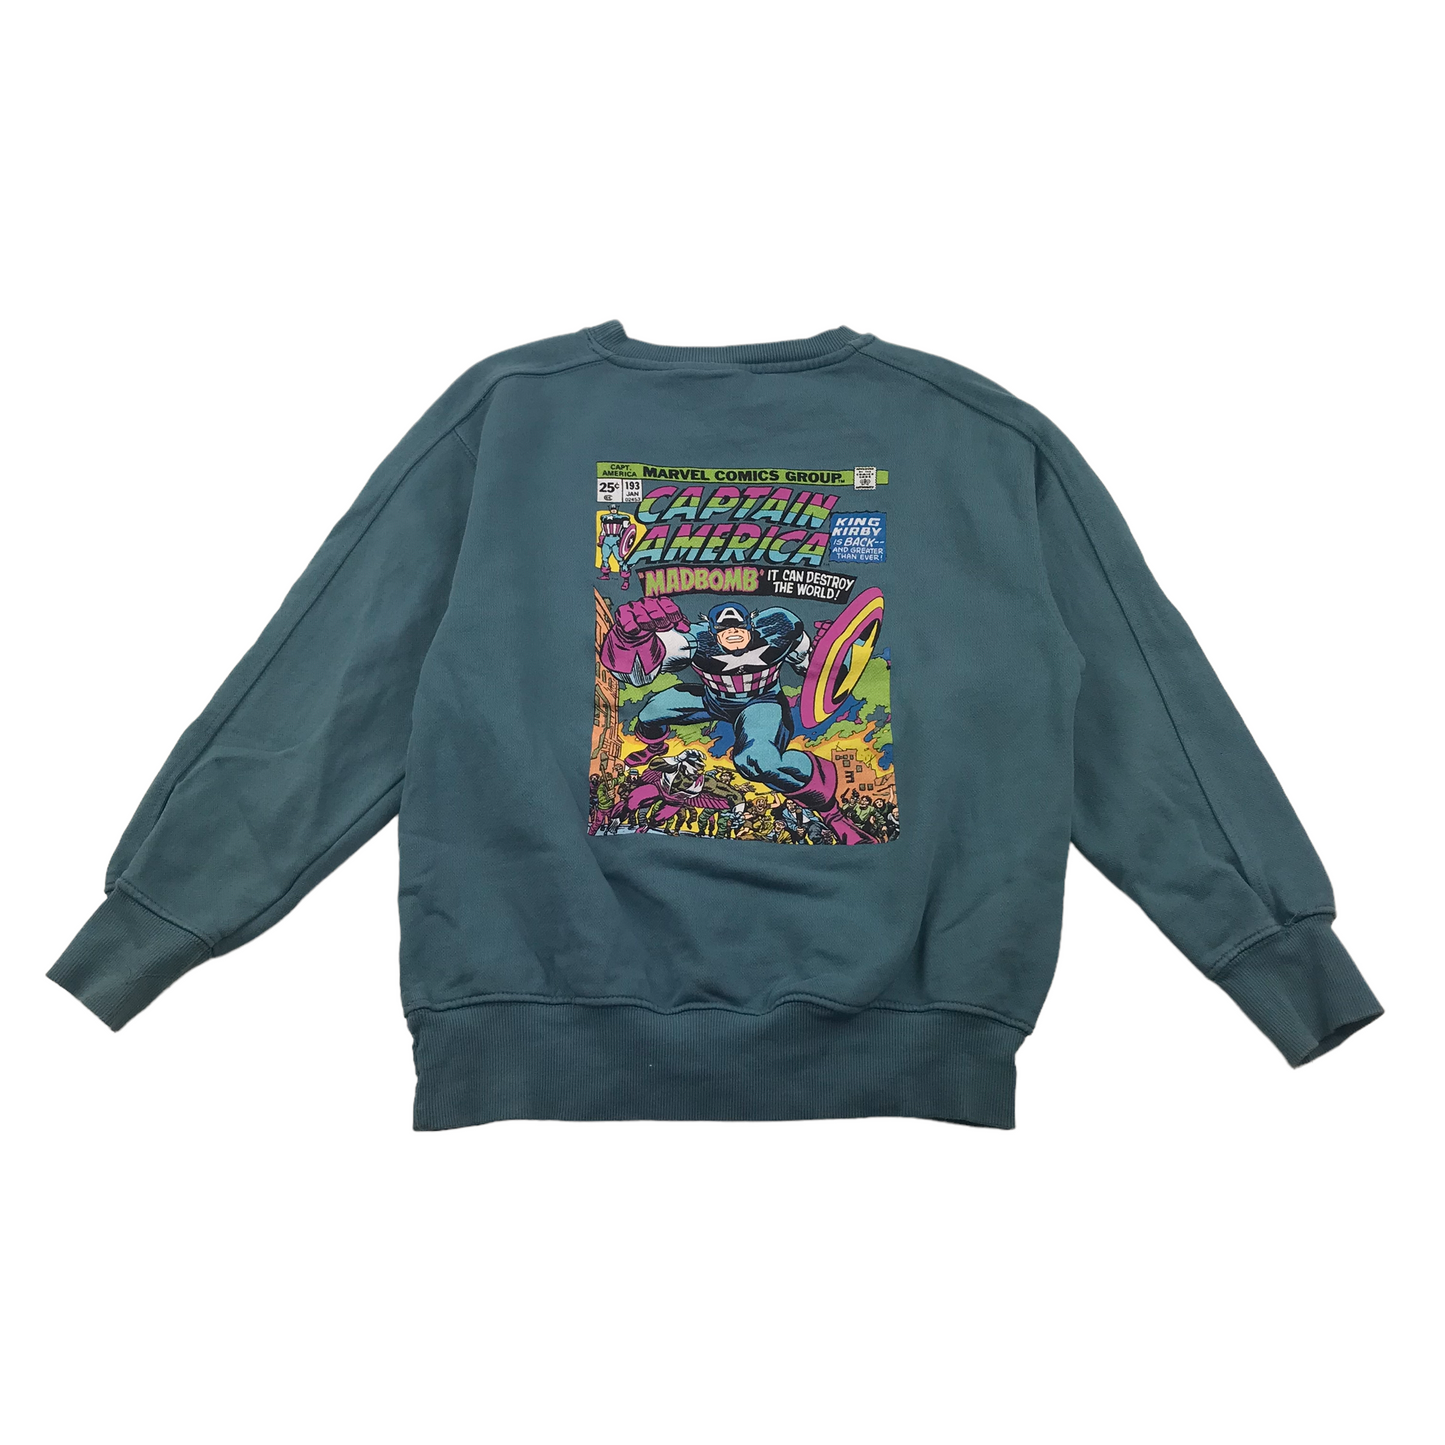 Zara Sweater Age 11 Turquoise Marvel Captain America Jersey